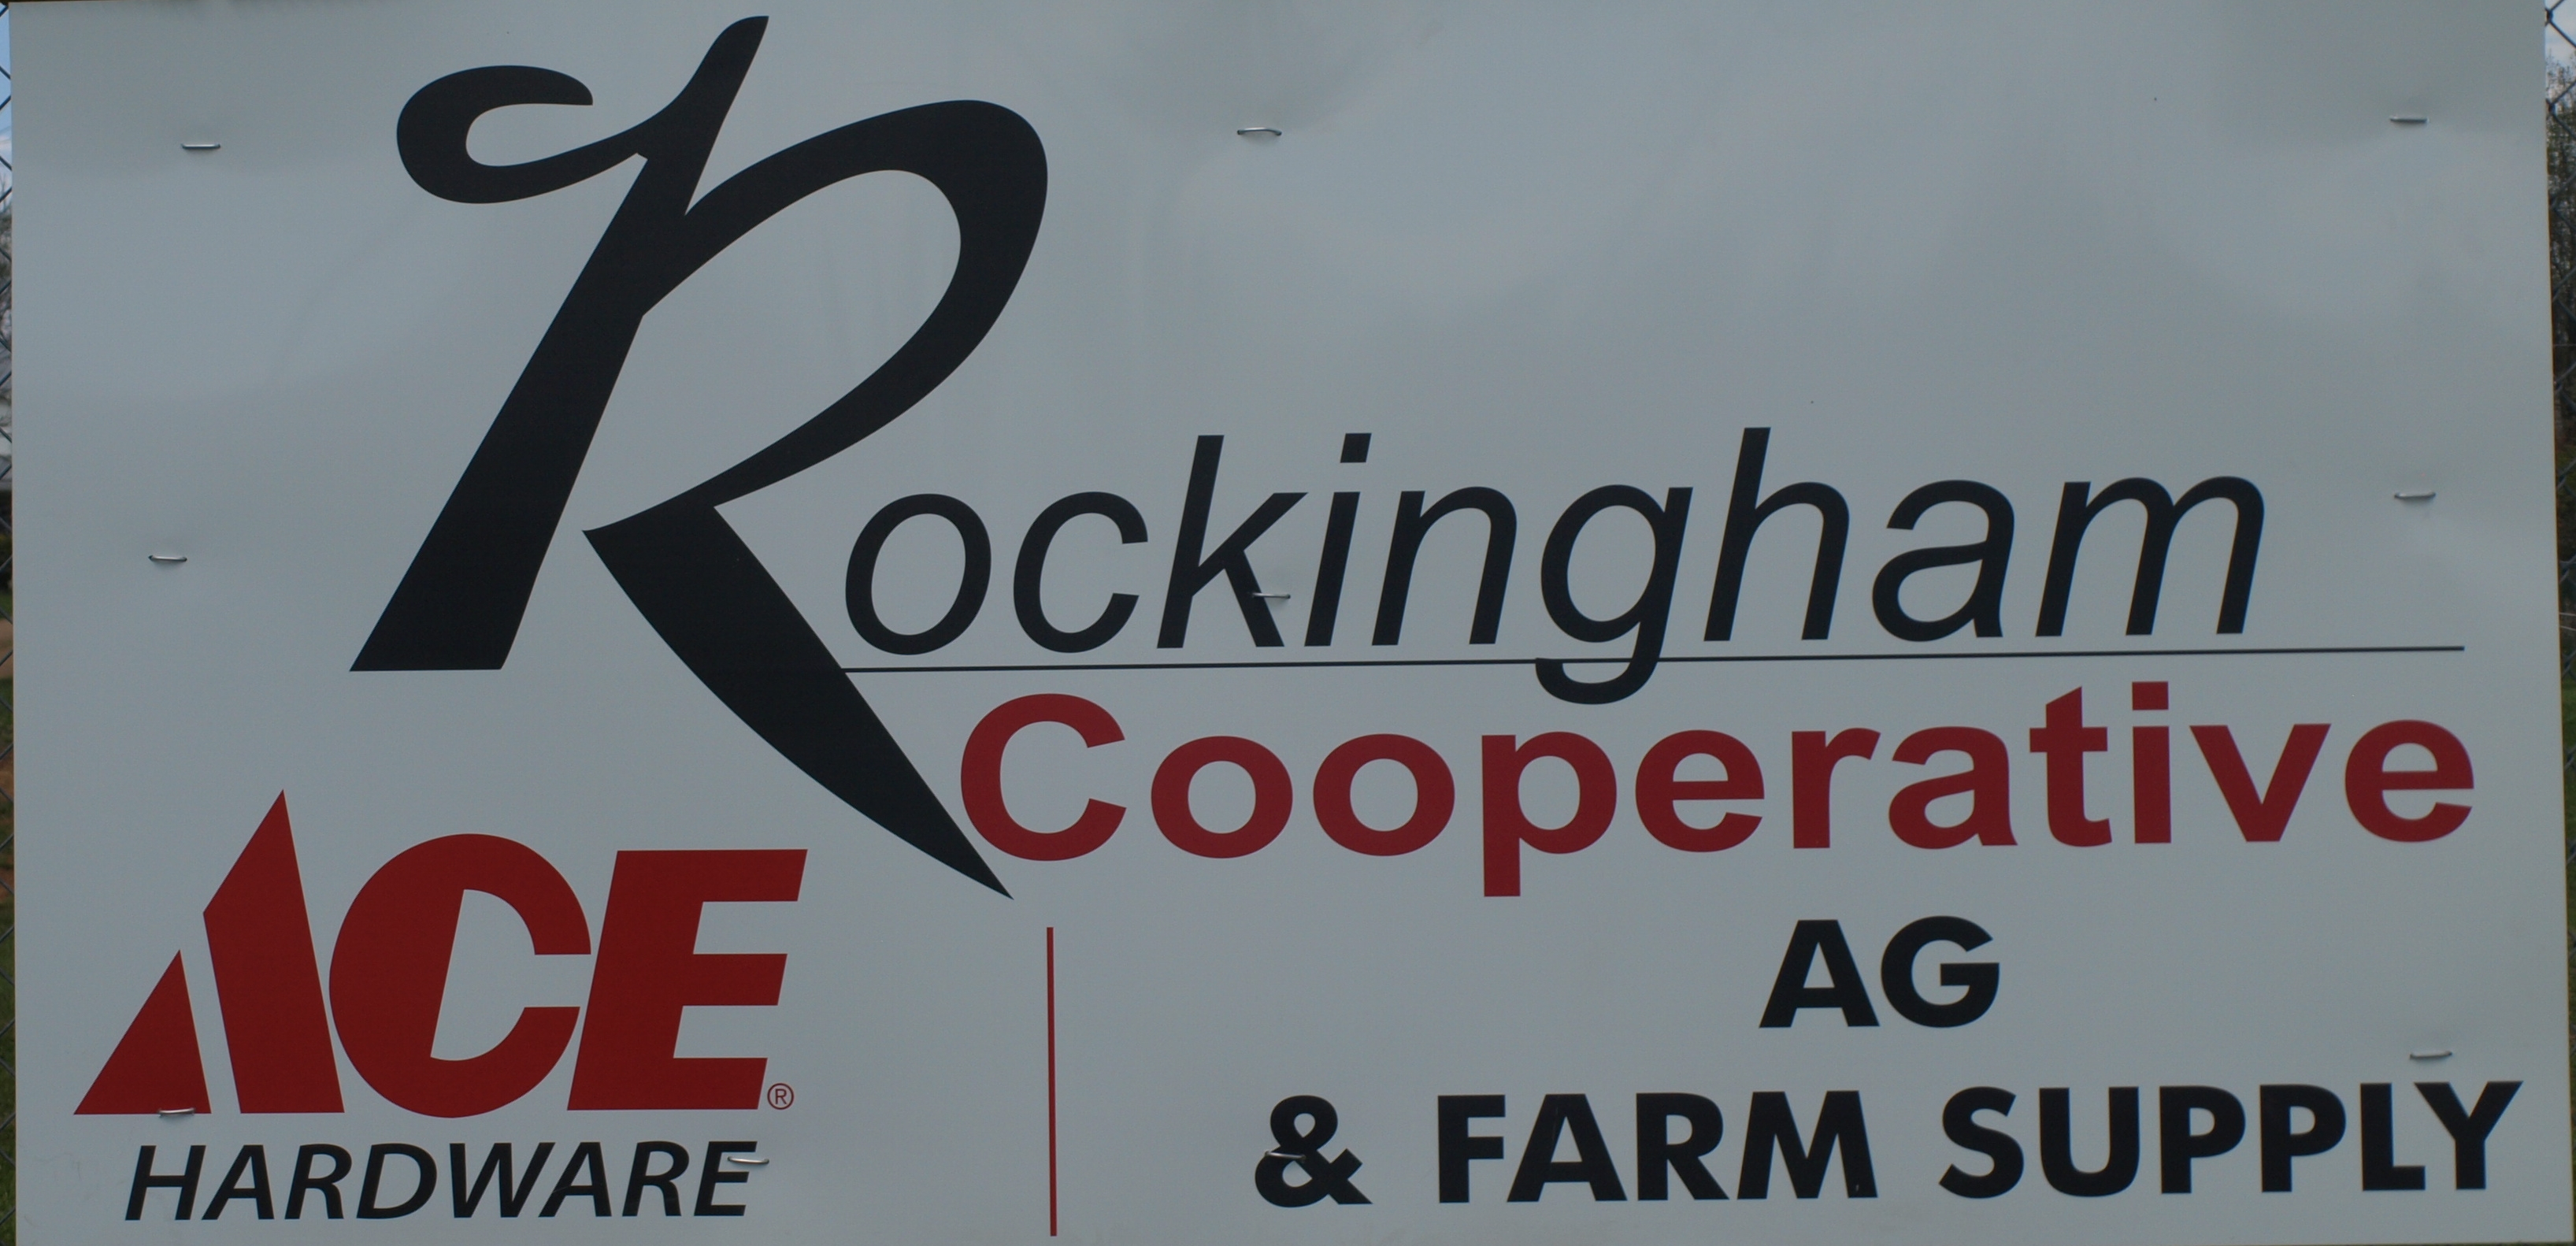 Rockingham Cooperative Ace Hardware/AG & Farm Supply